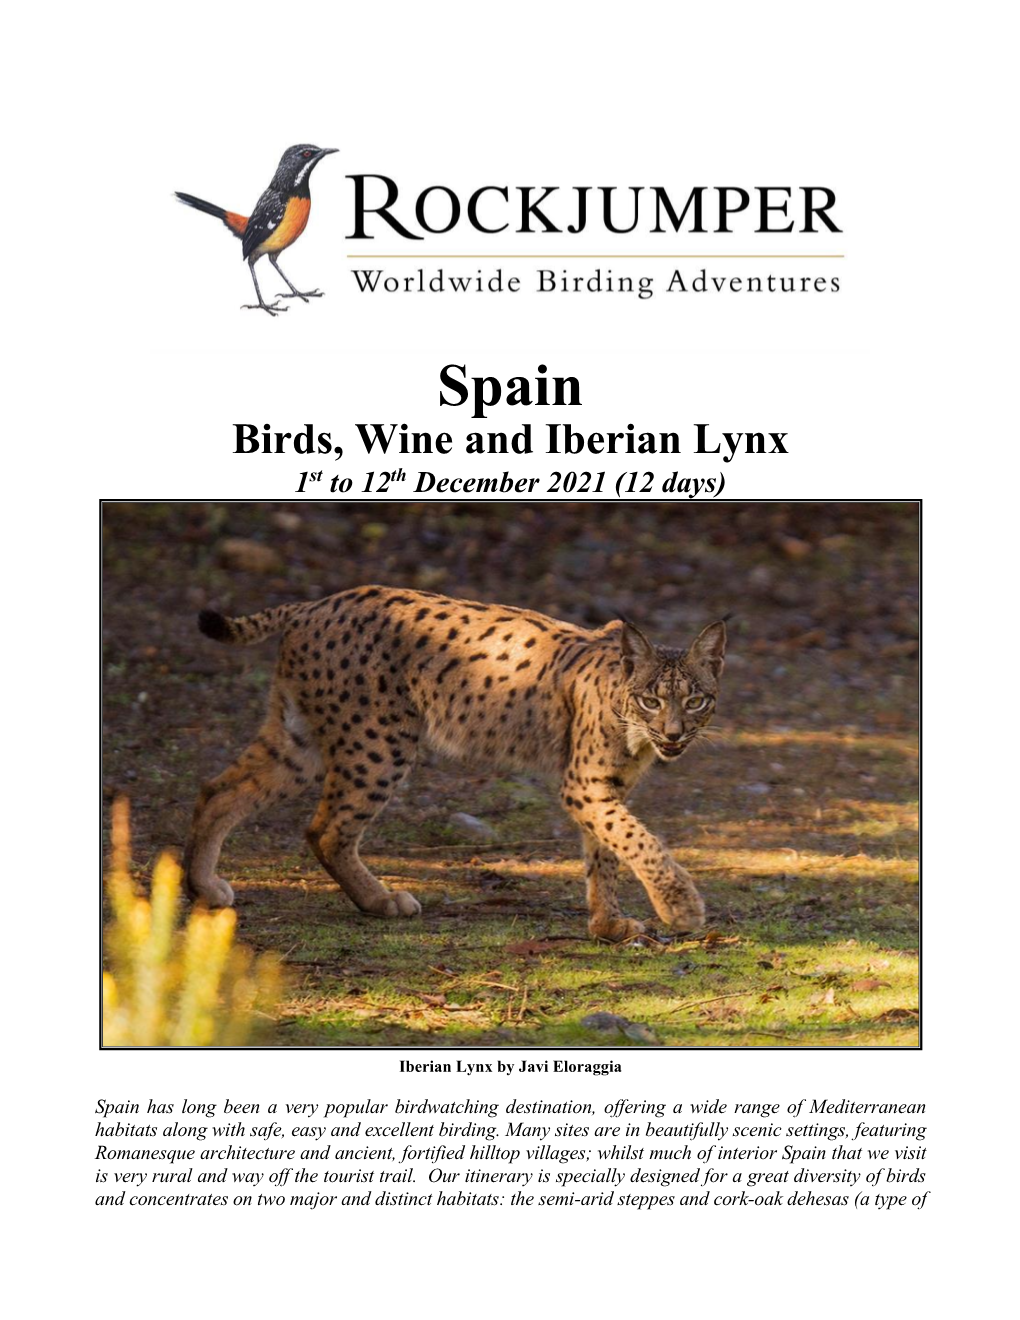 Birds, Wine and Iberian Lynx